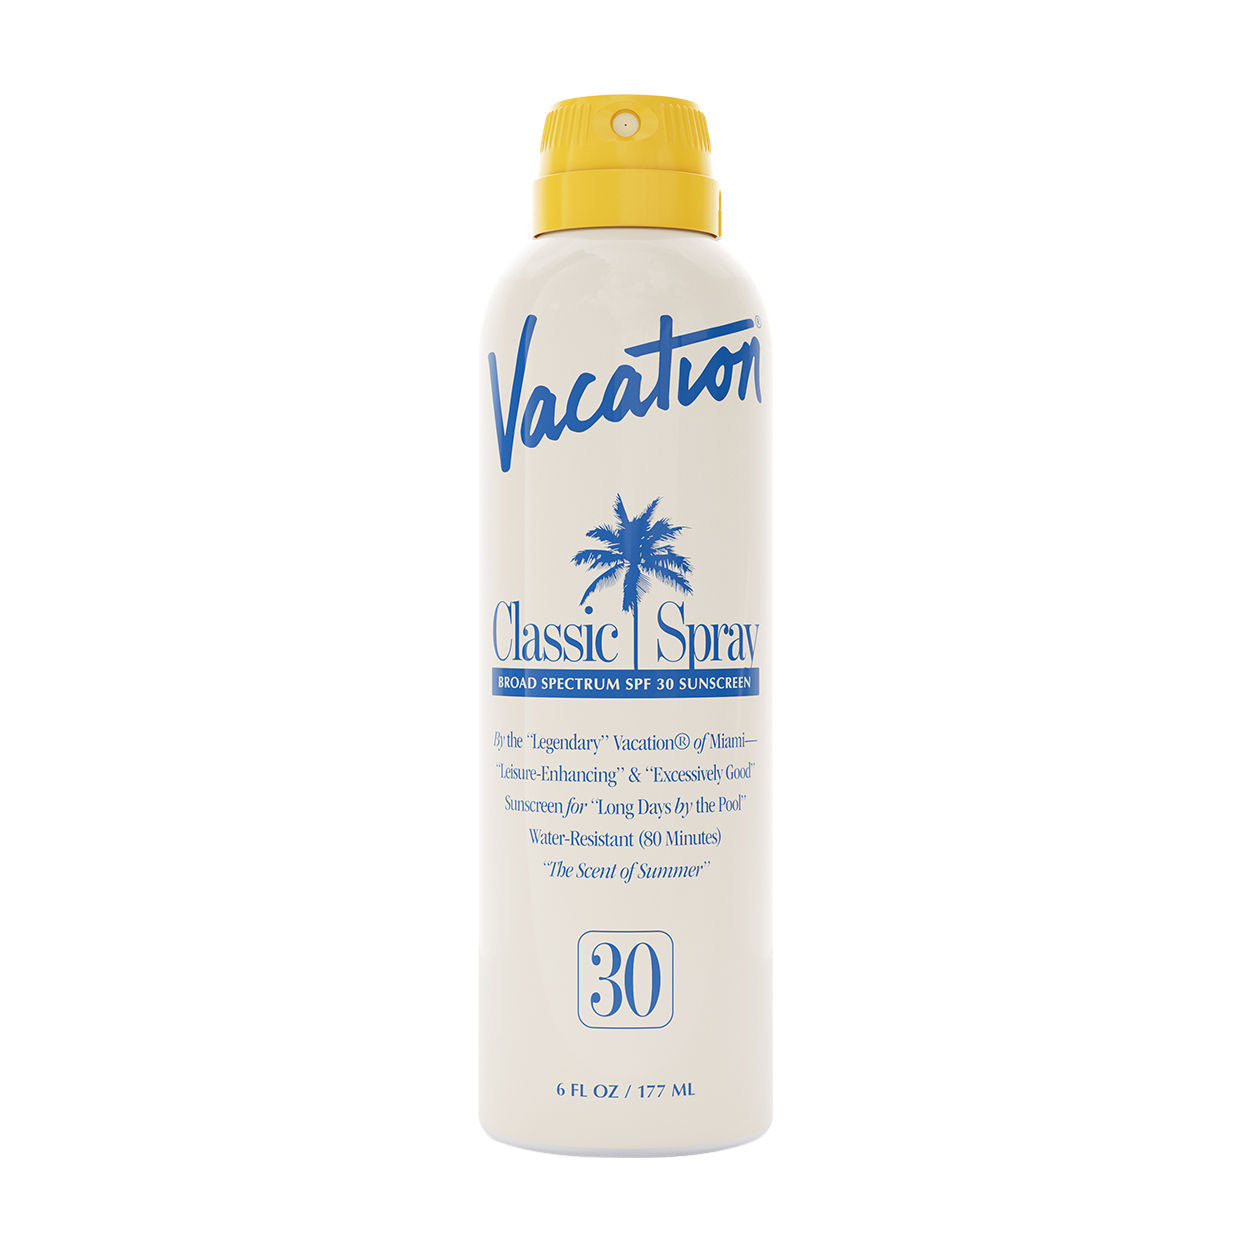 Vacation Classic Spray SPF 30 main image